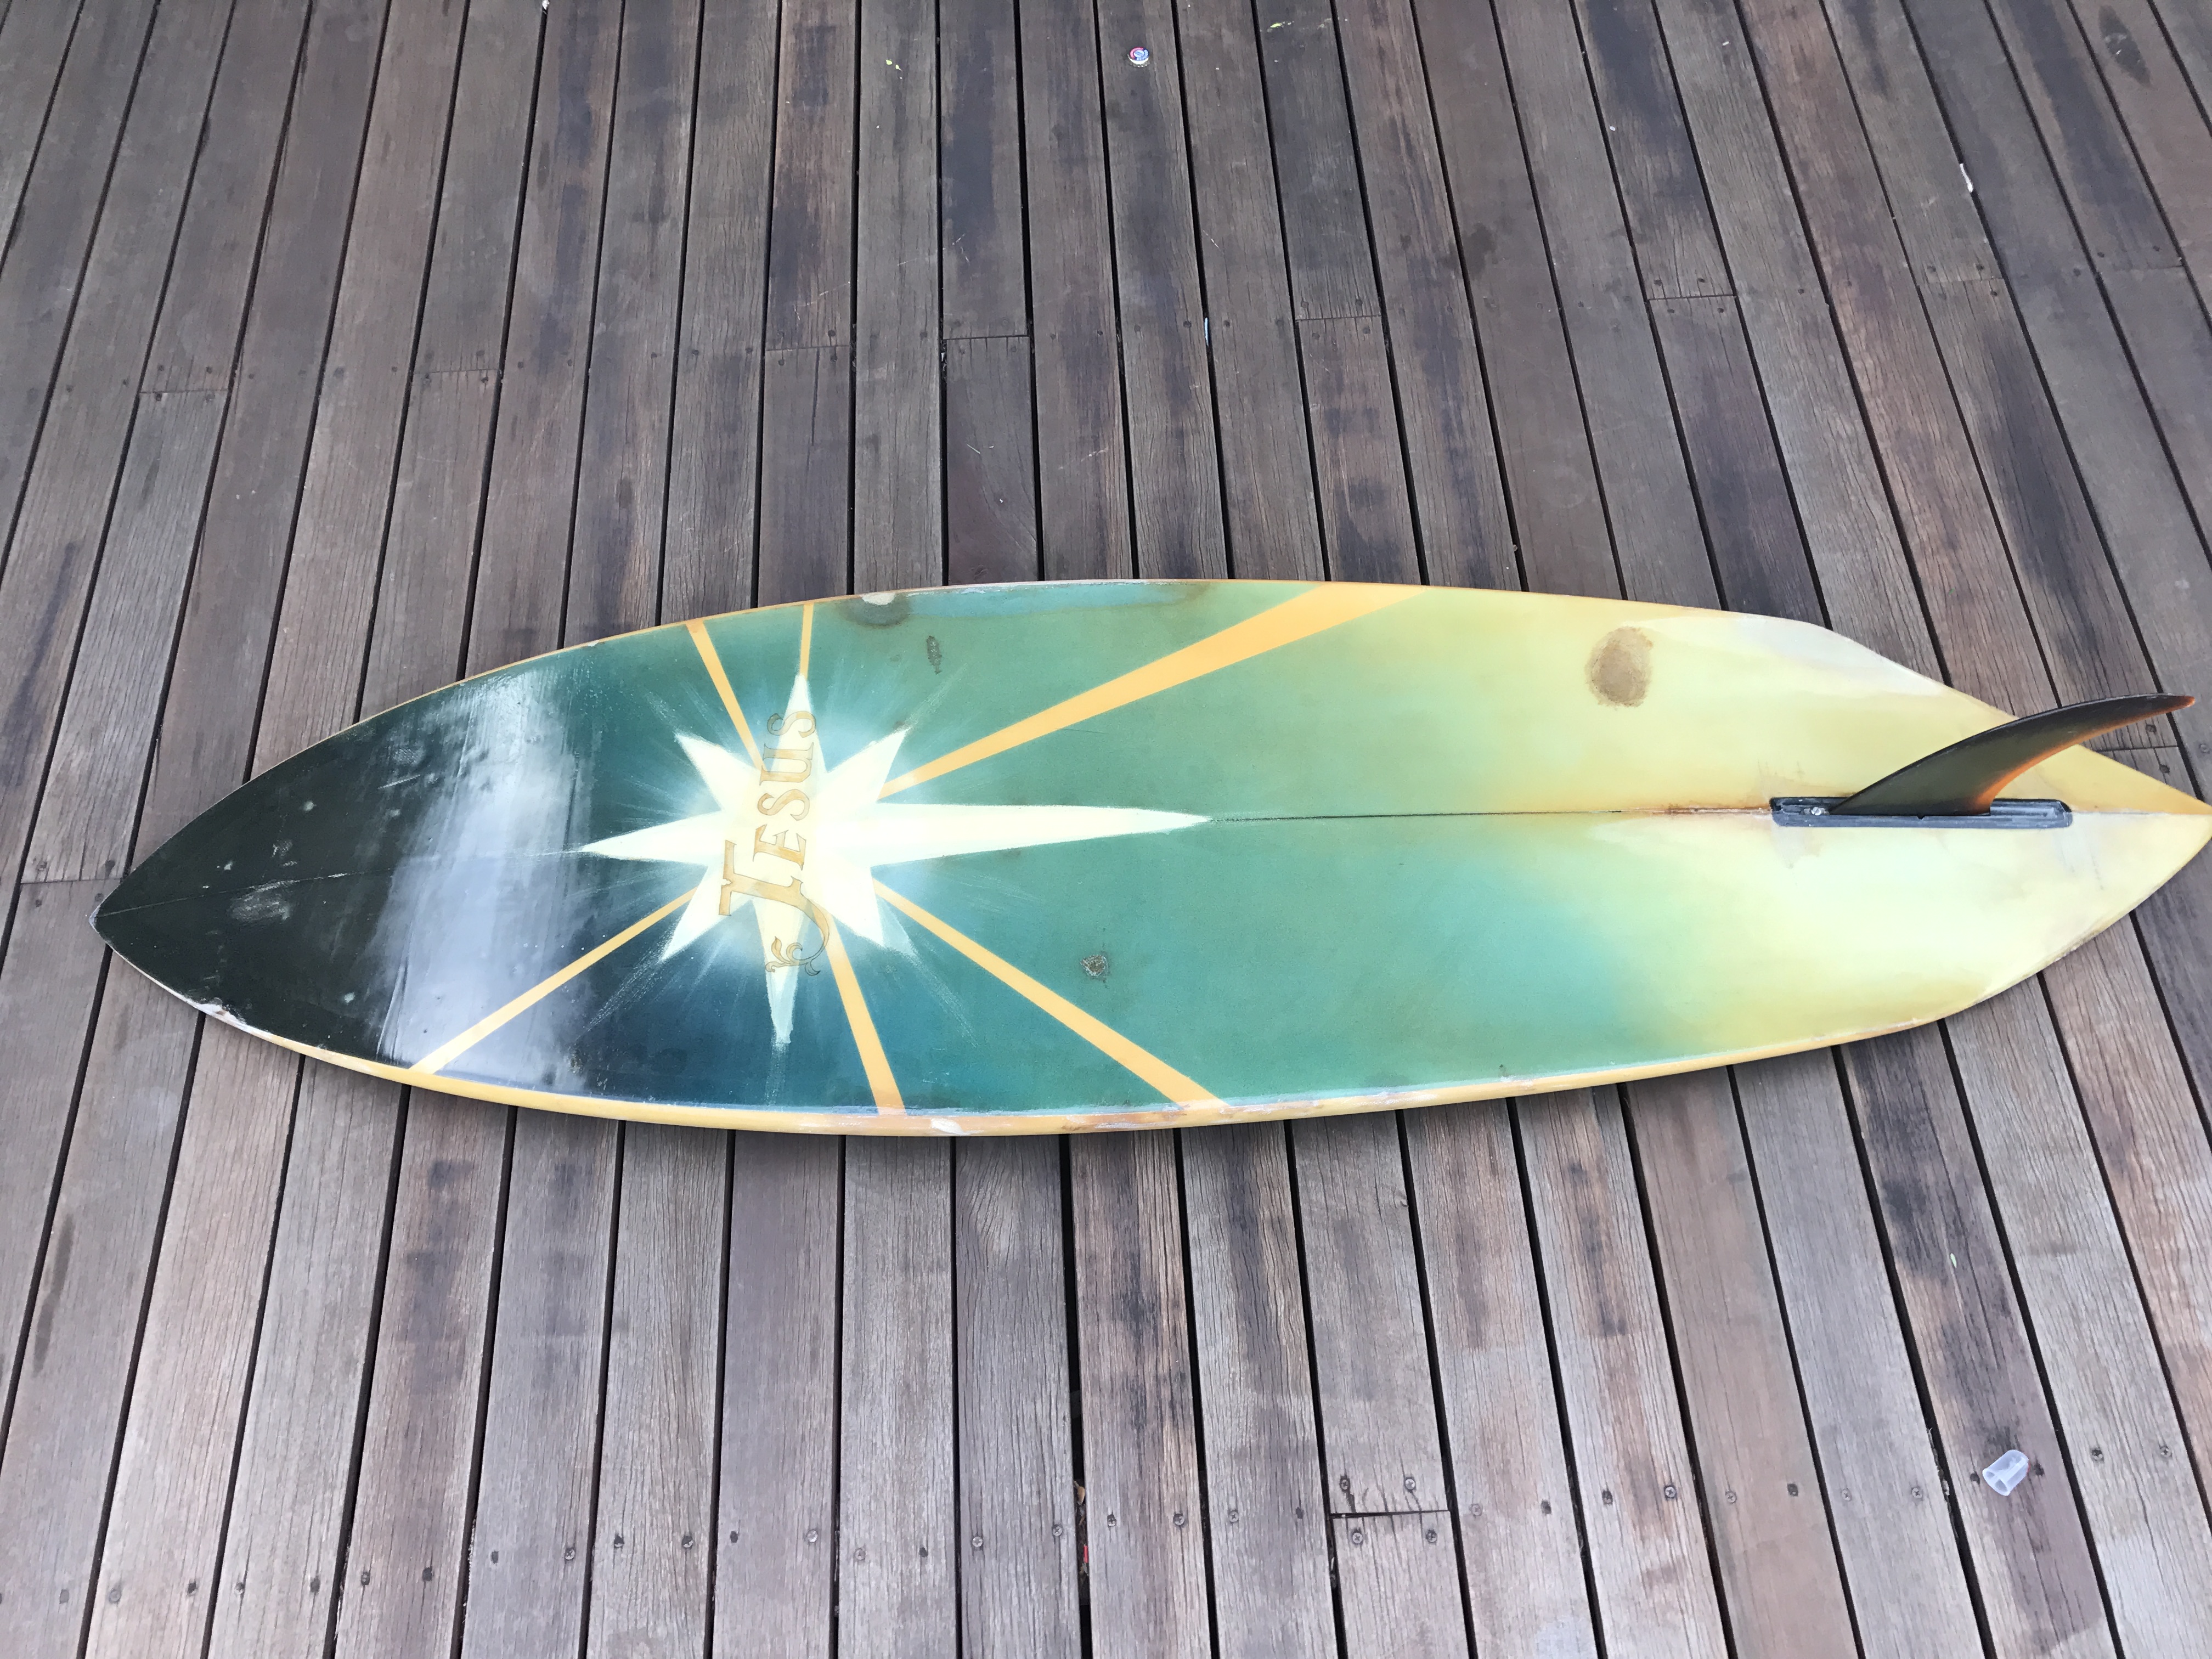 Nick-Mas-Surfboards-living-water